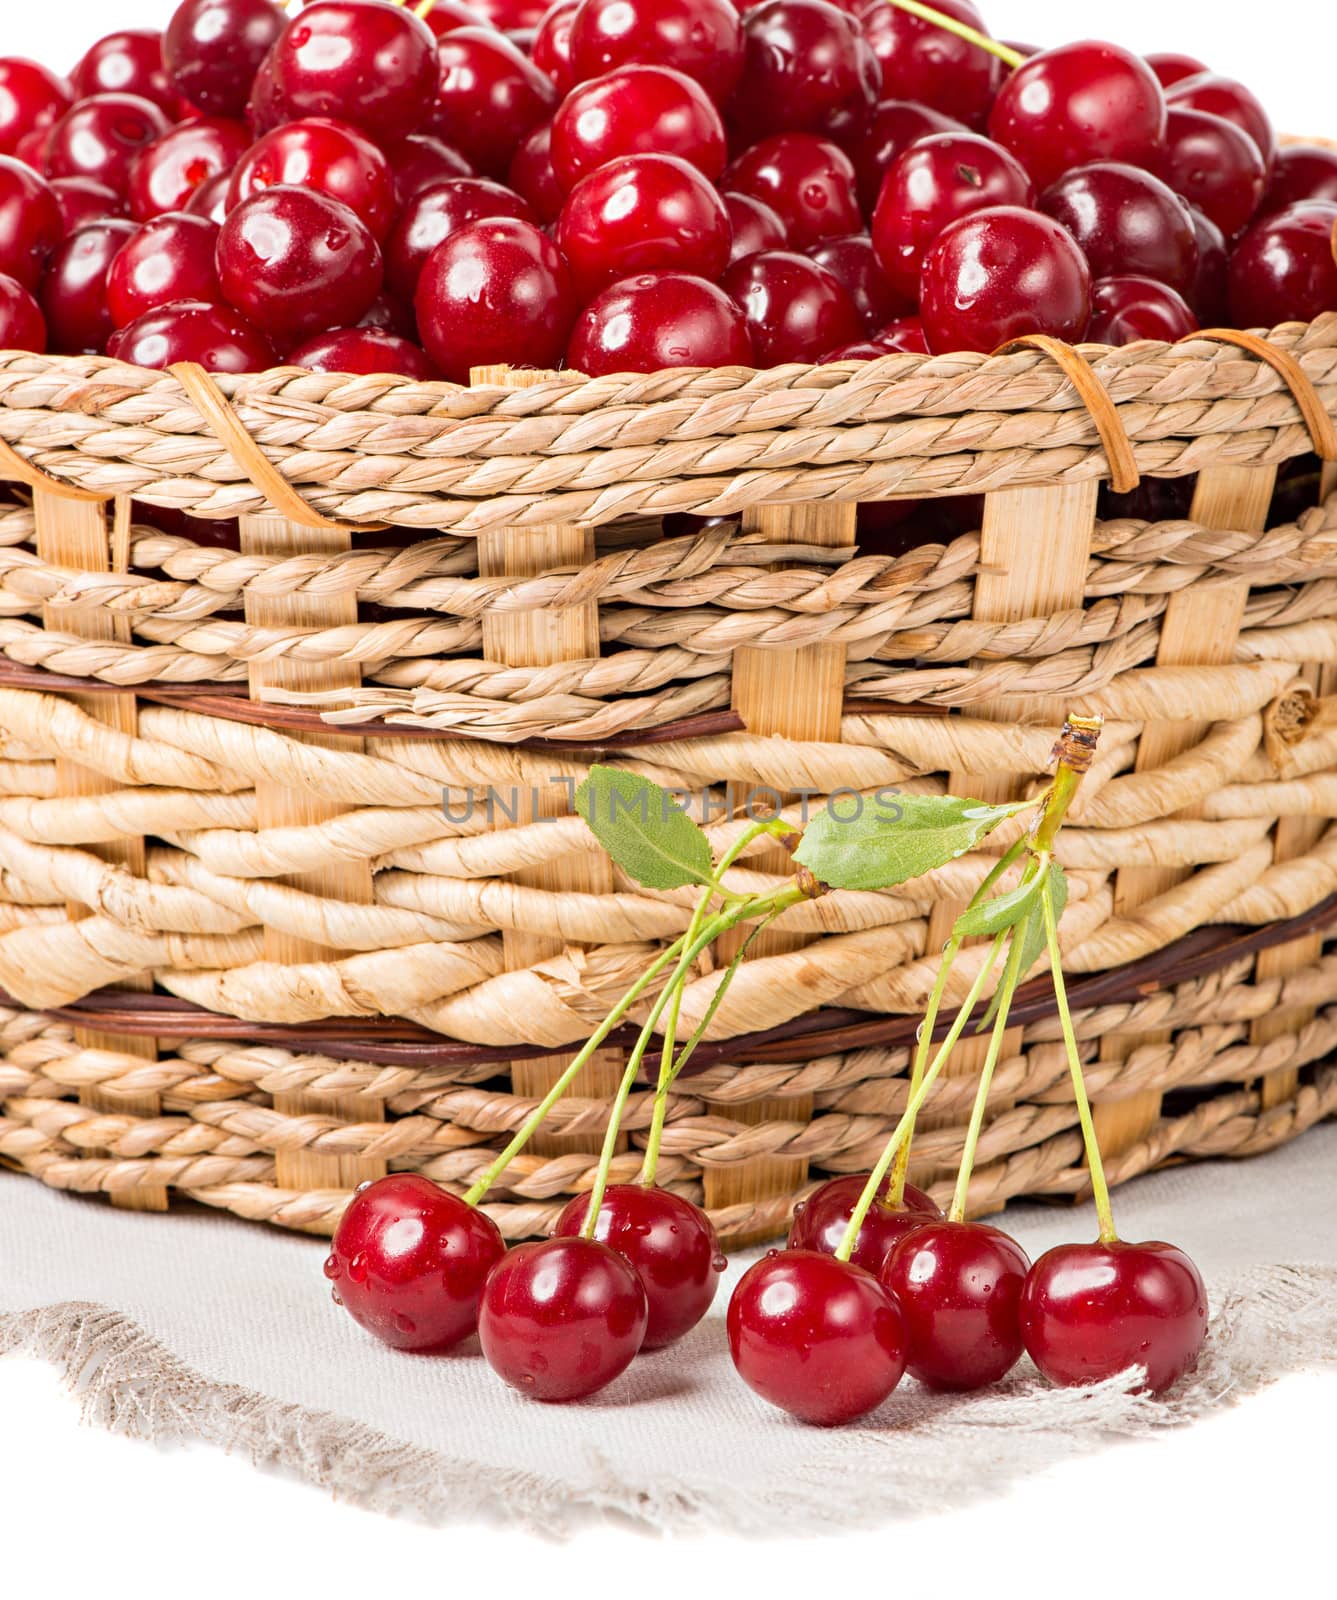 Sweet juicy cherry in basket by Draw05